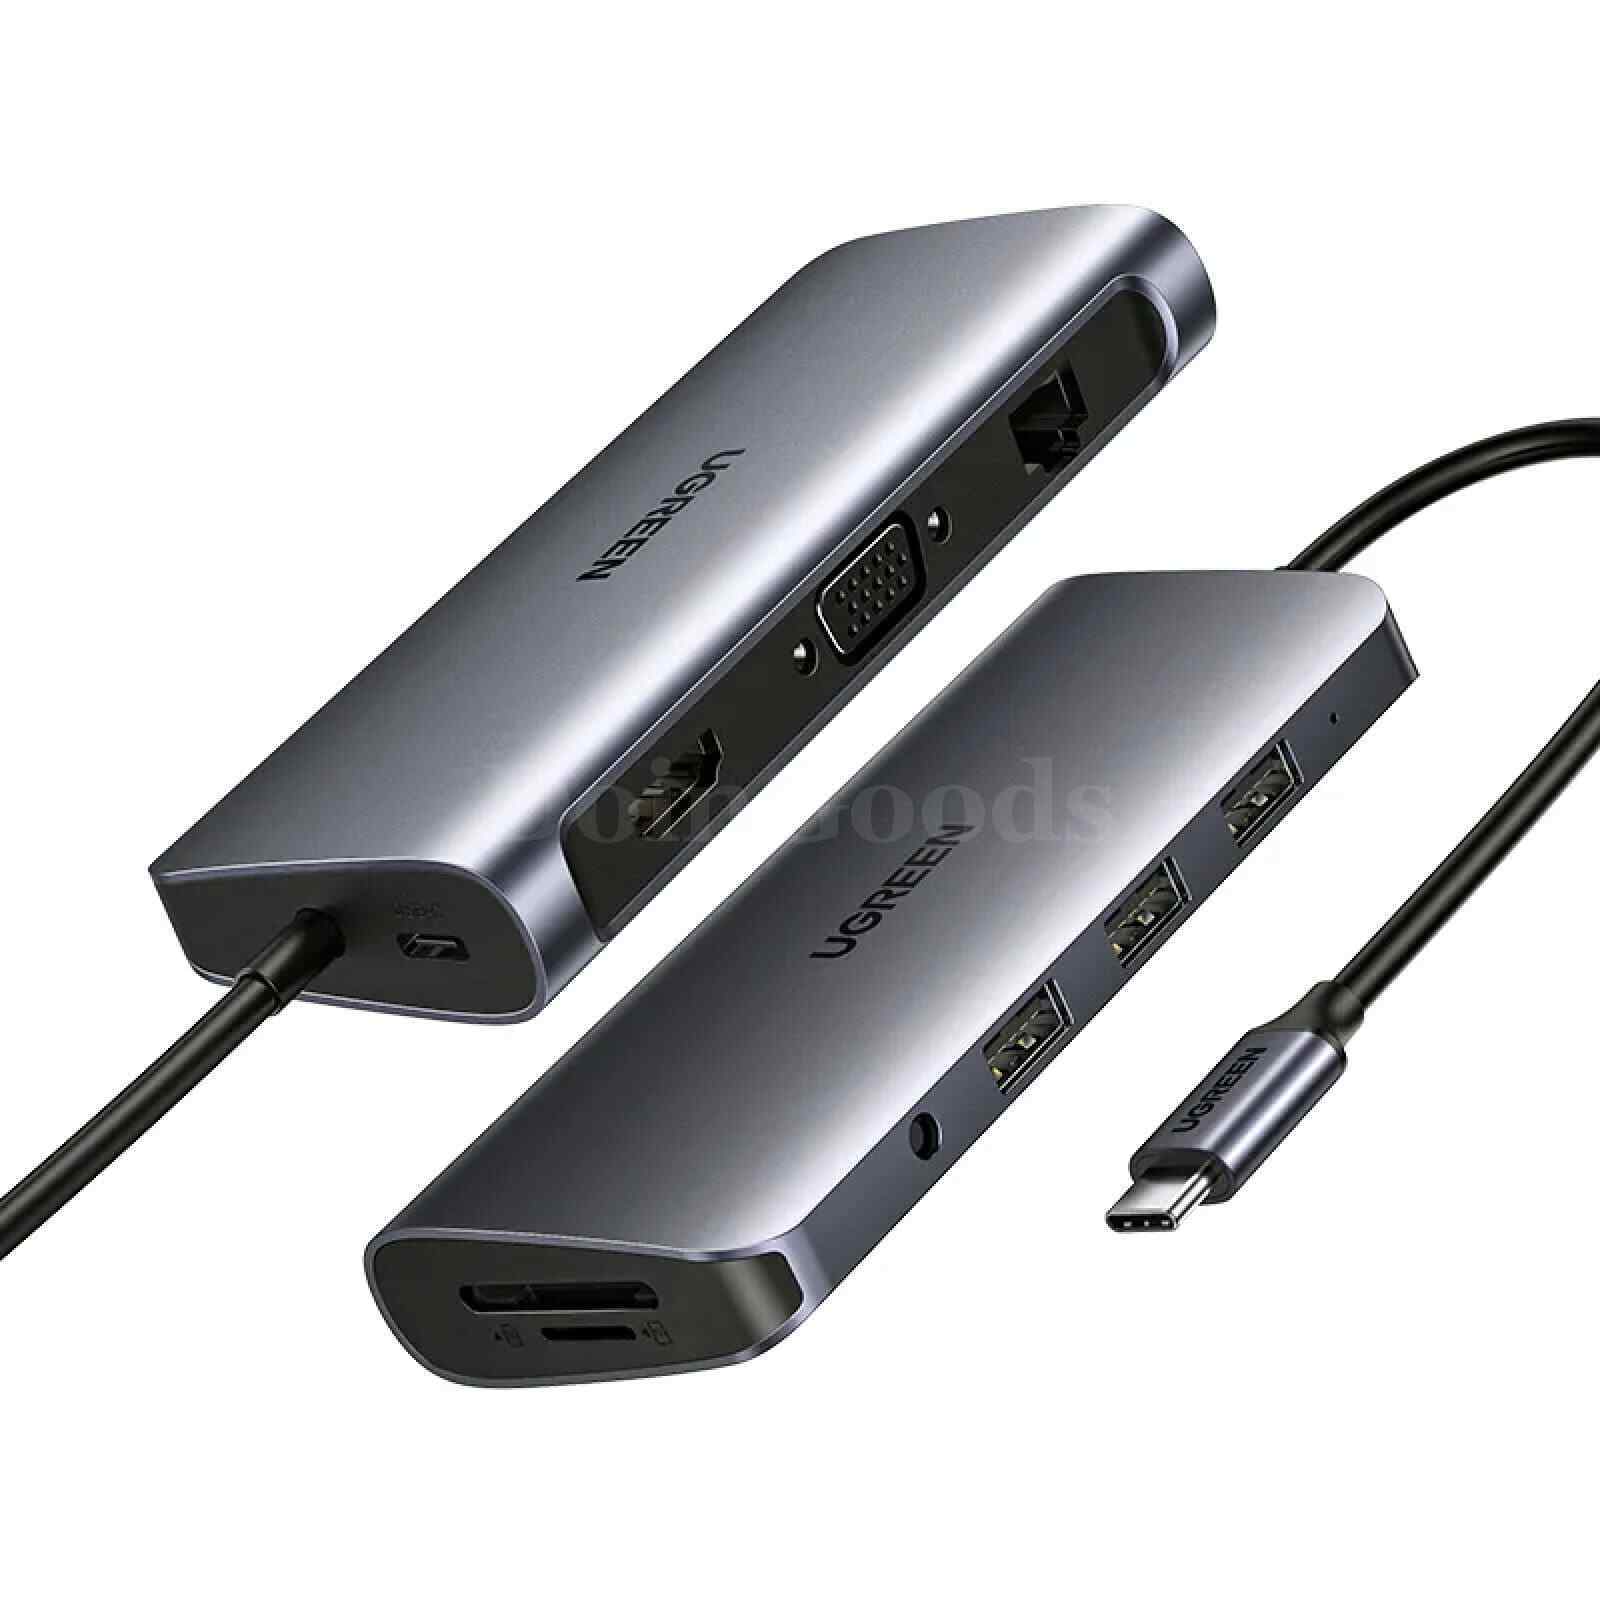 Ugreen 10-in-1 USB C Hub HDMI 4K VGA USB 3.0 PD 3.5mm for MacBook iPad Pro